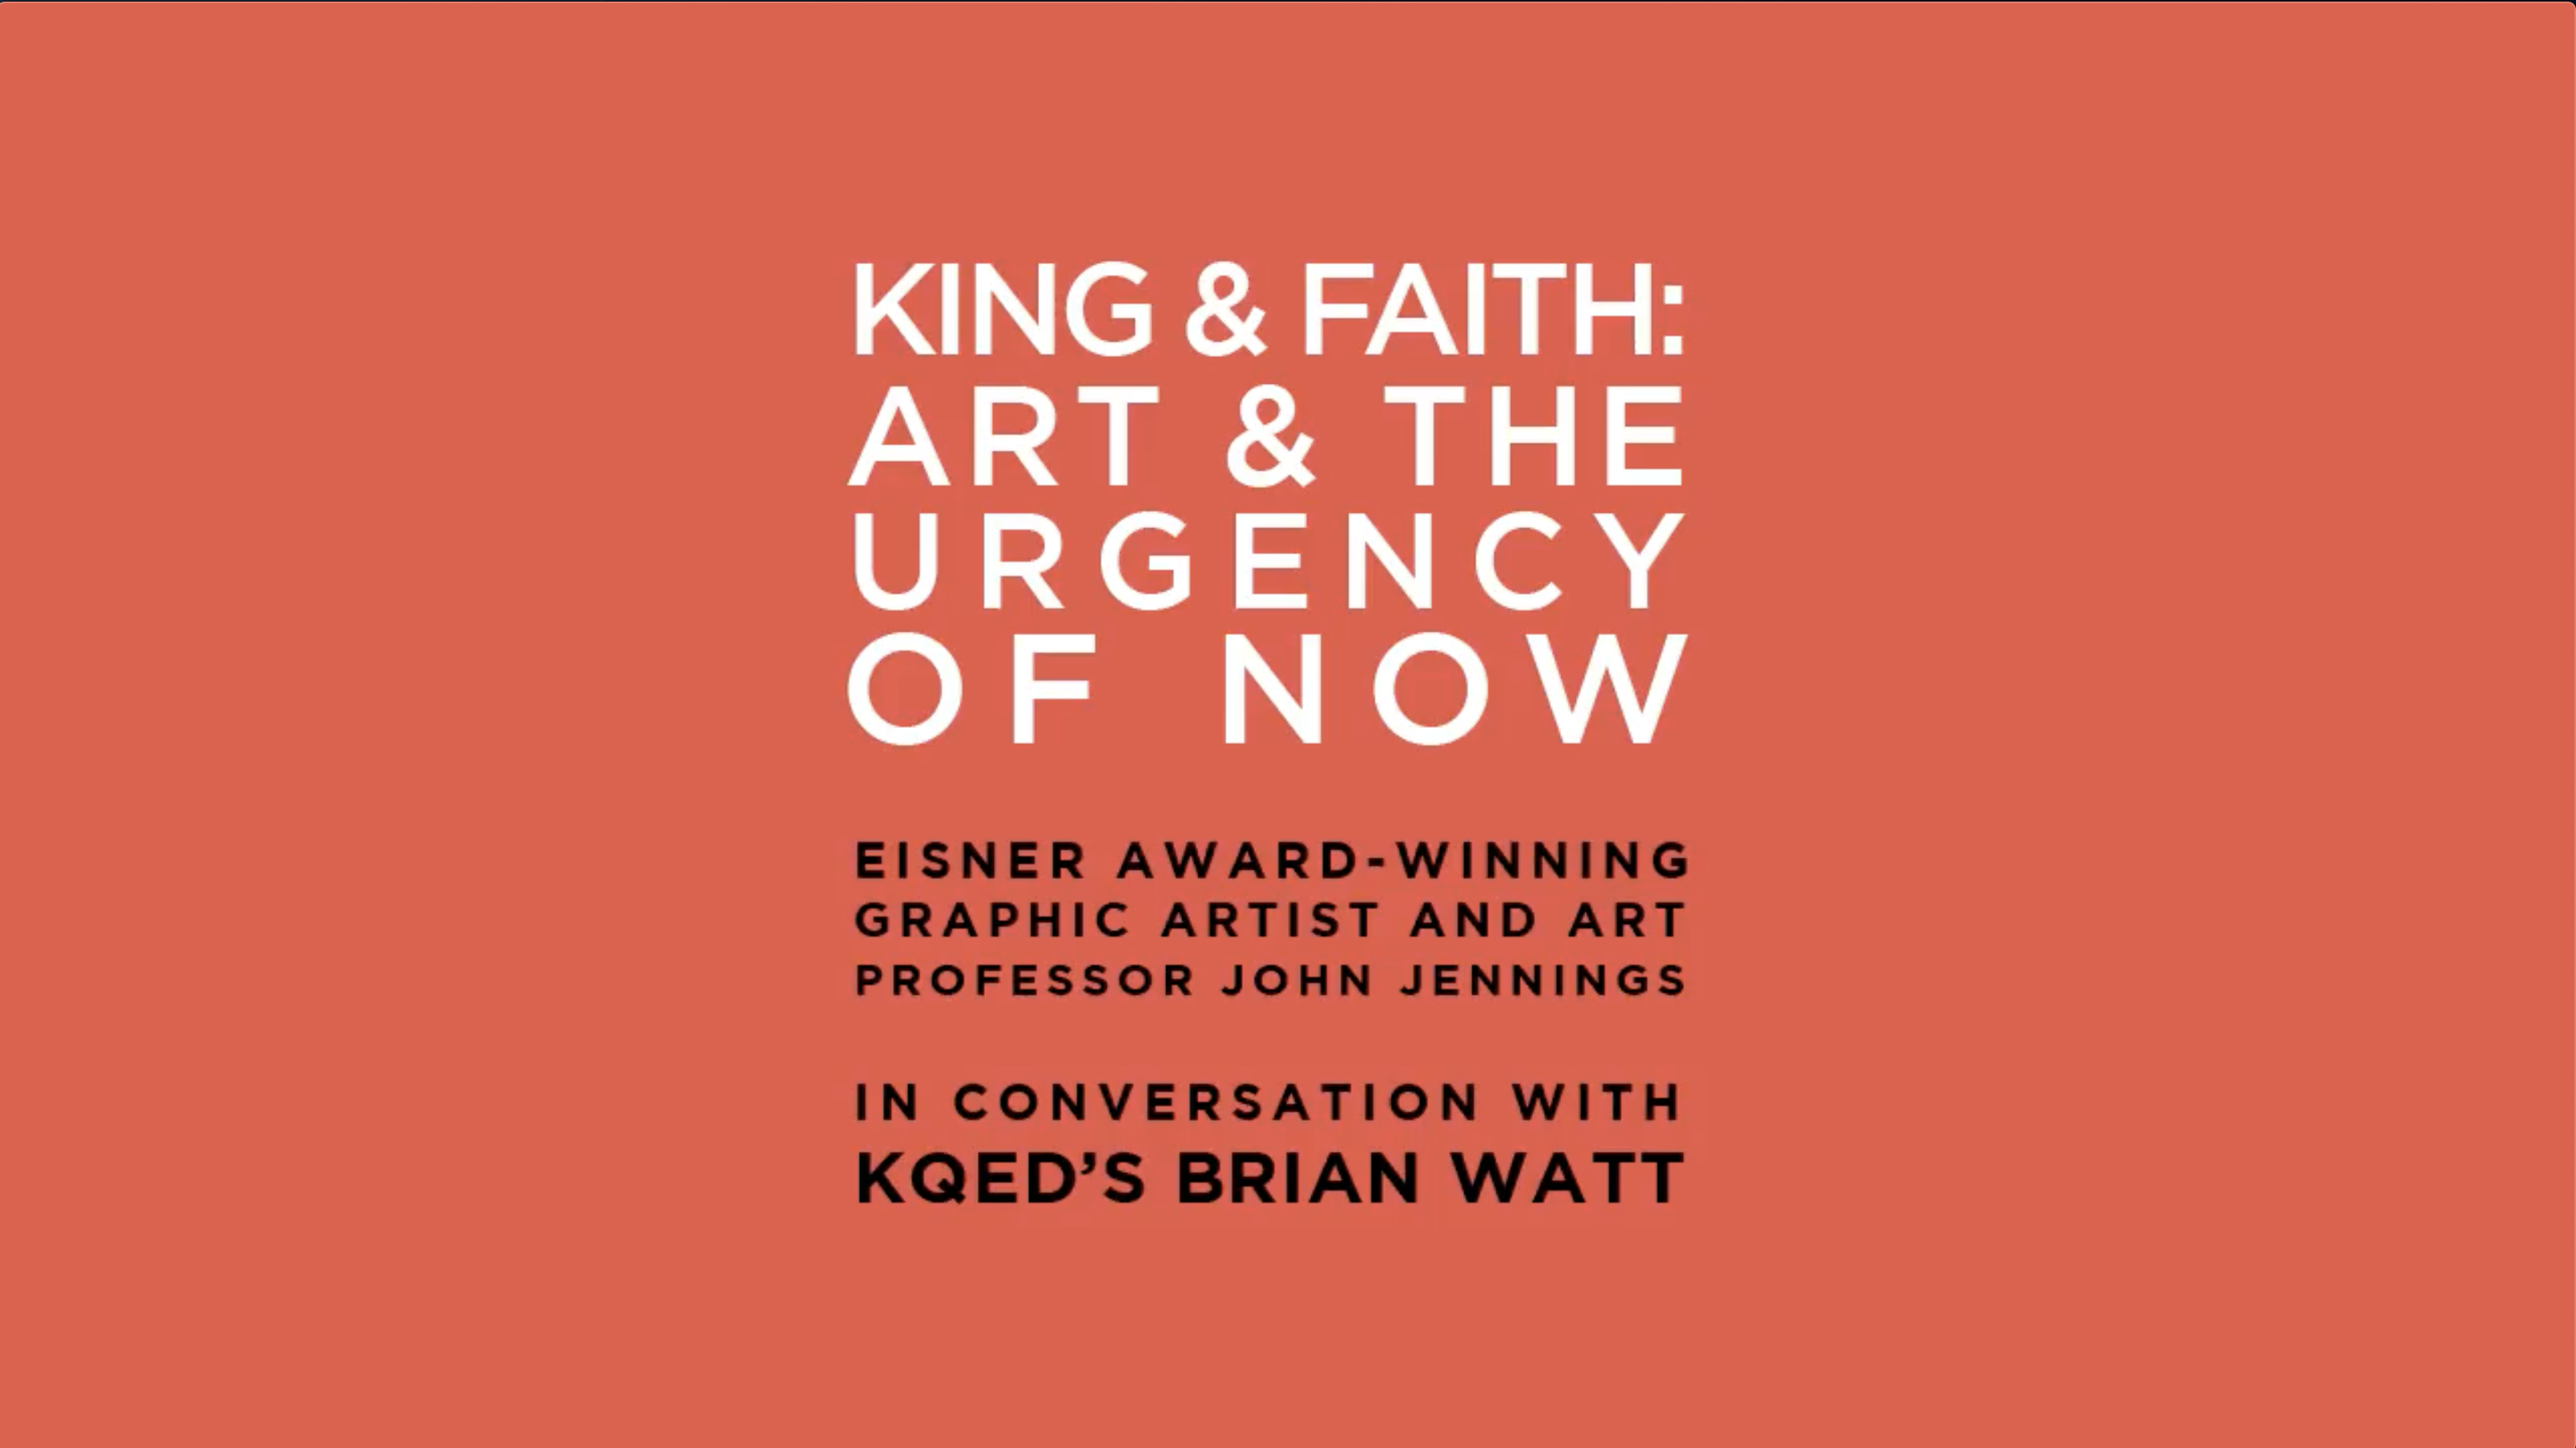 King & Faith Forum with John Jennings and Brian Watt